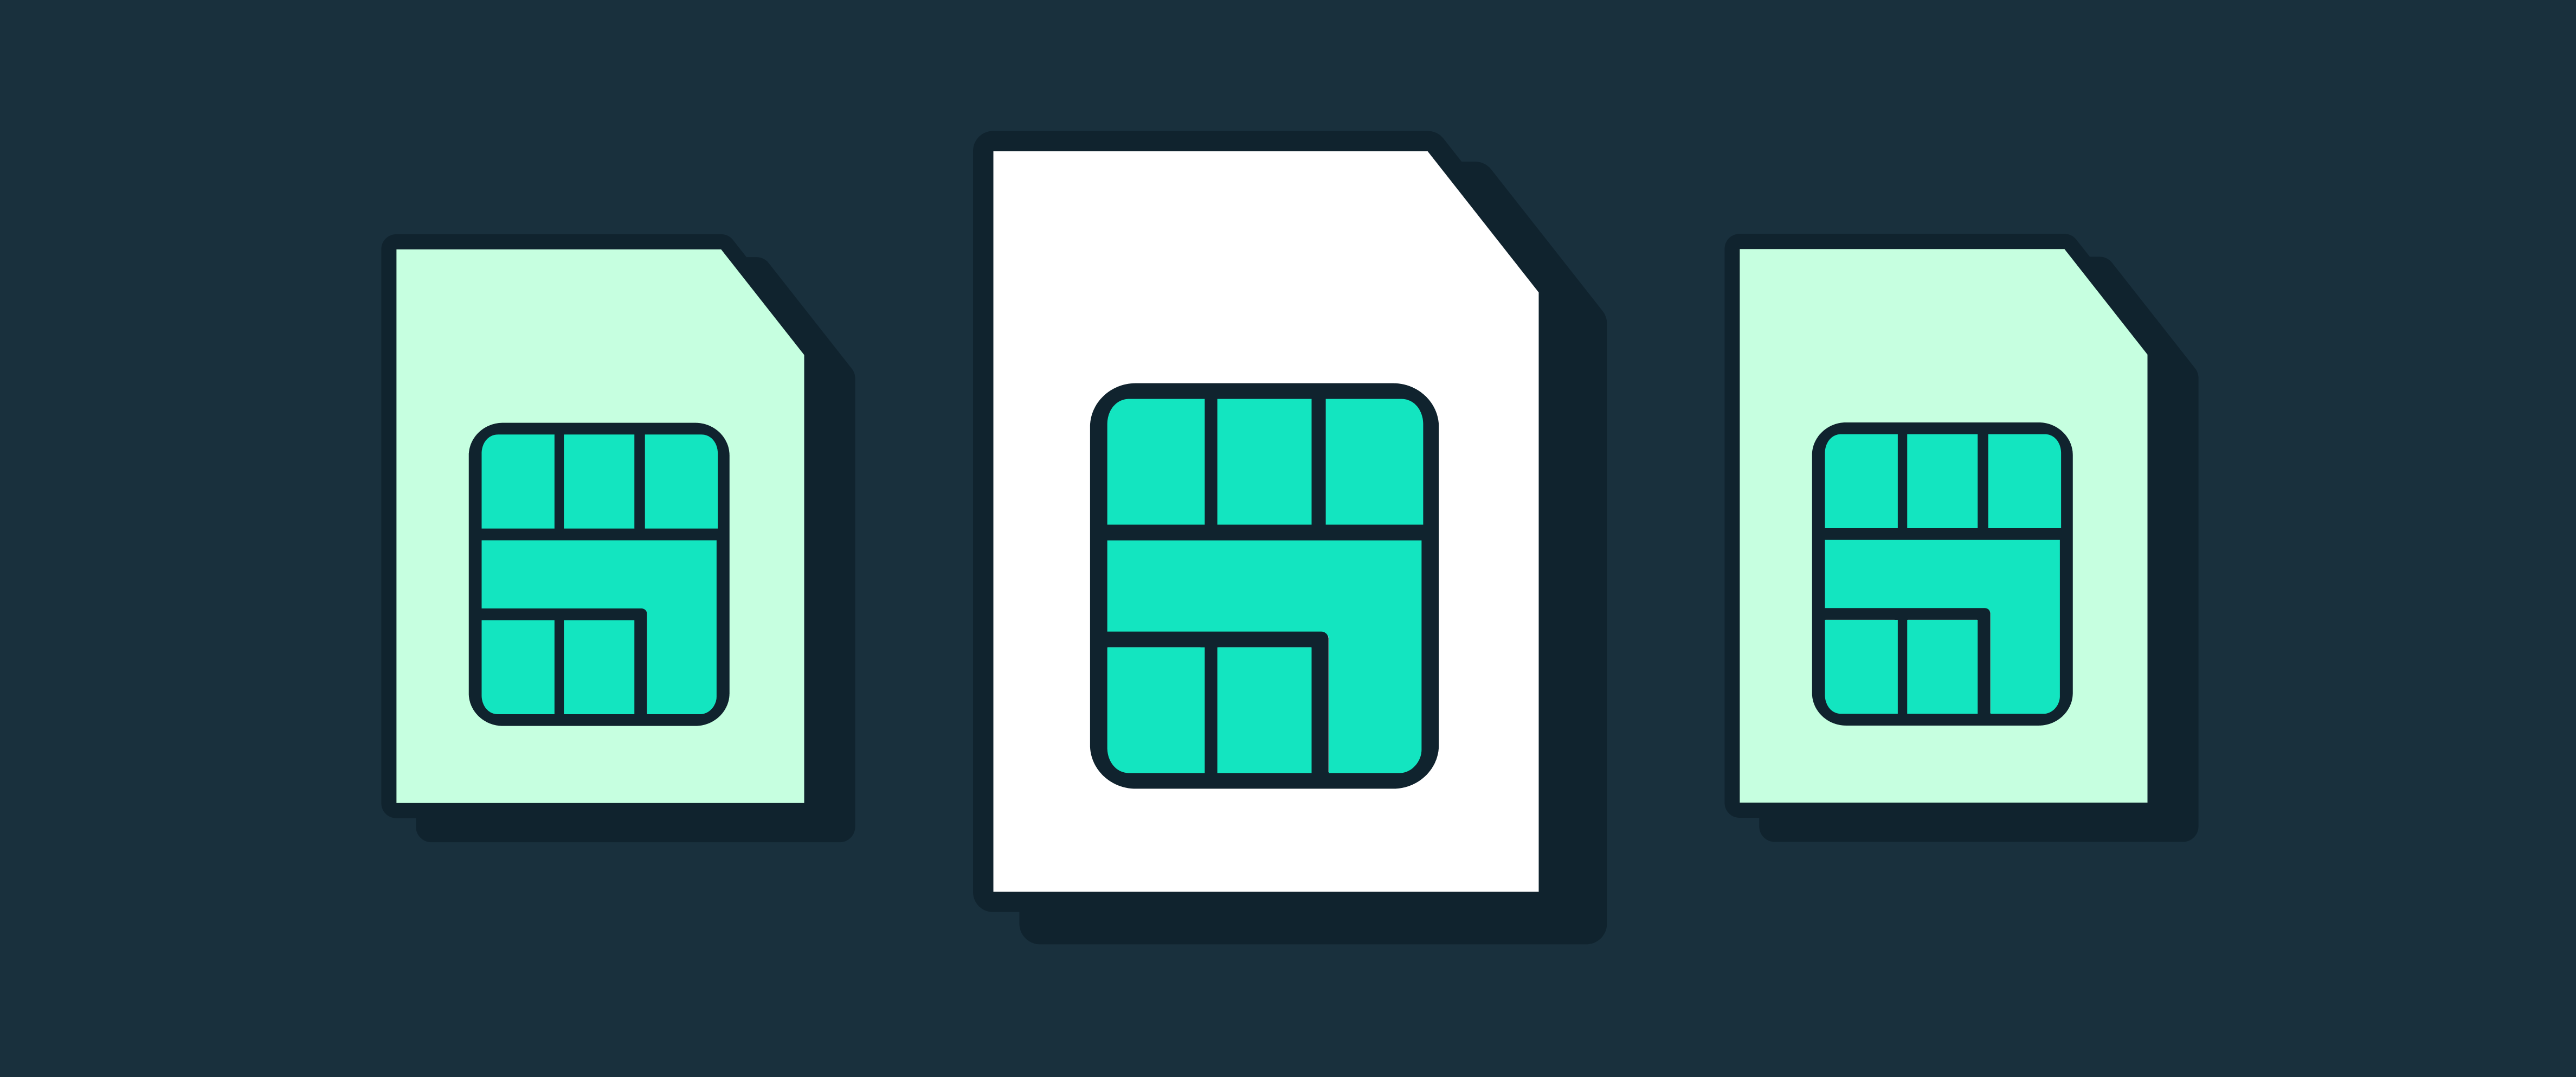 An illustration of three sim cards